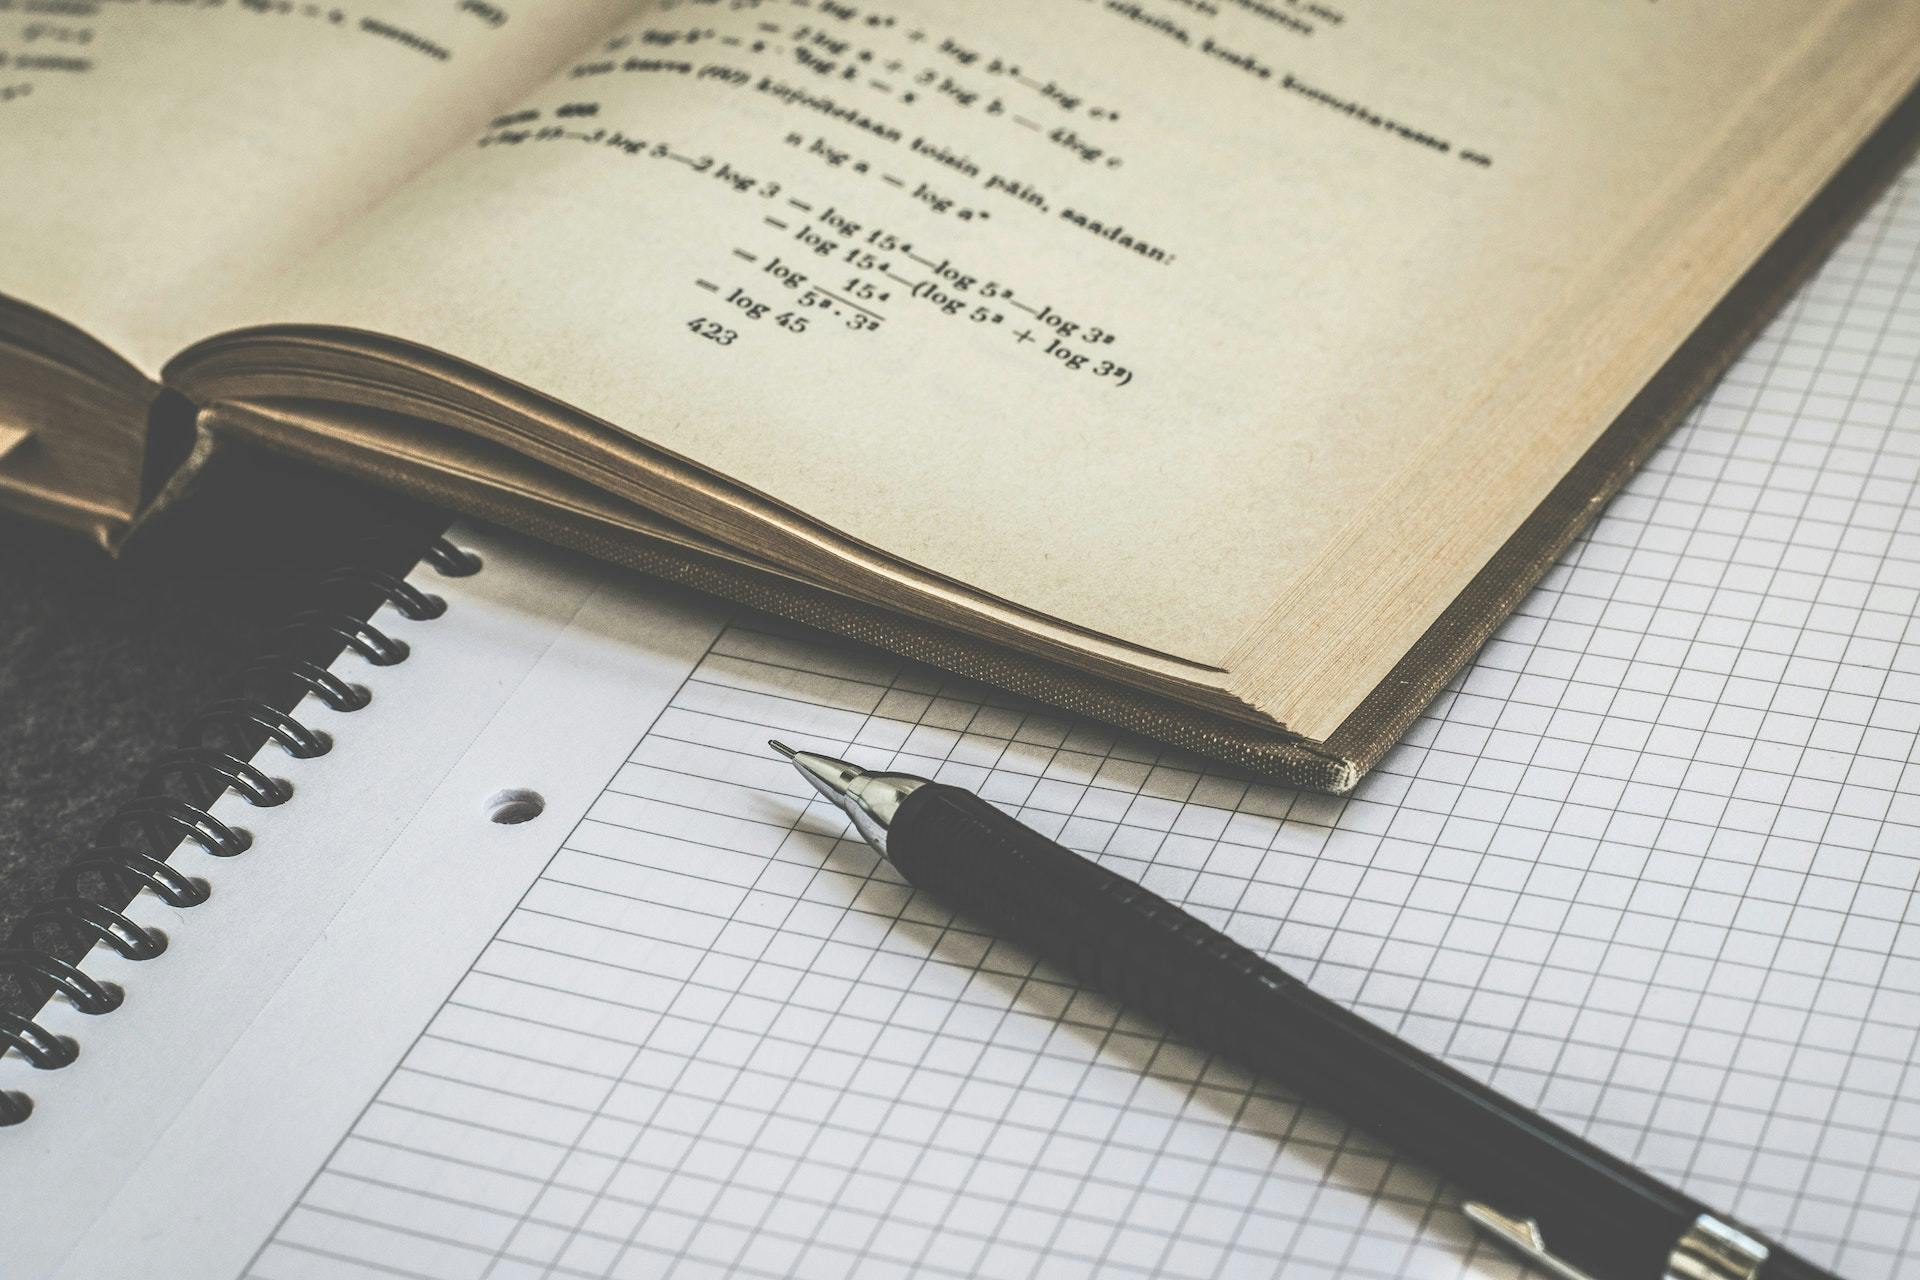 A mathematics textbook next to a pen and notepad.